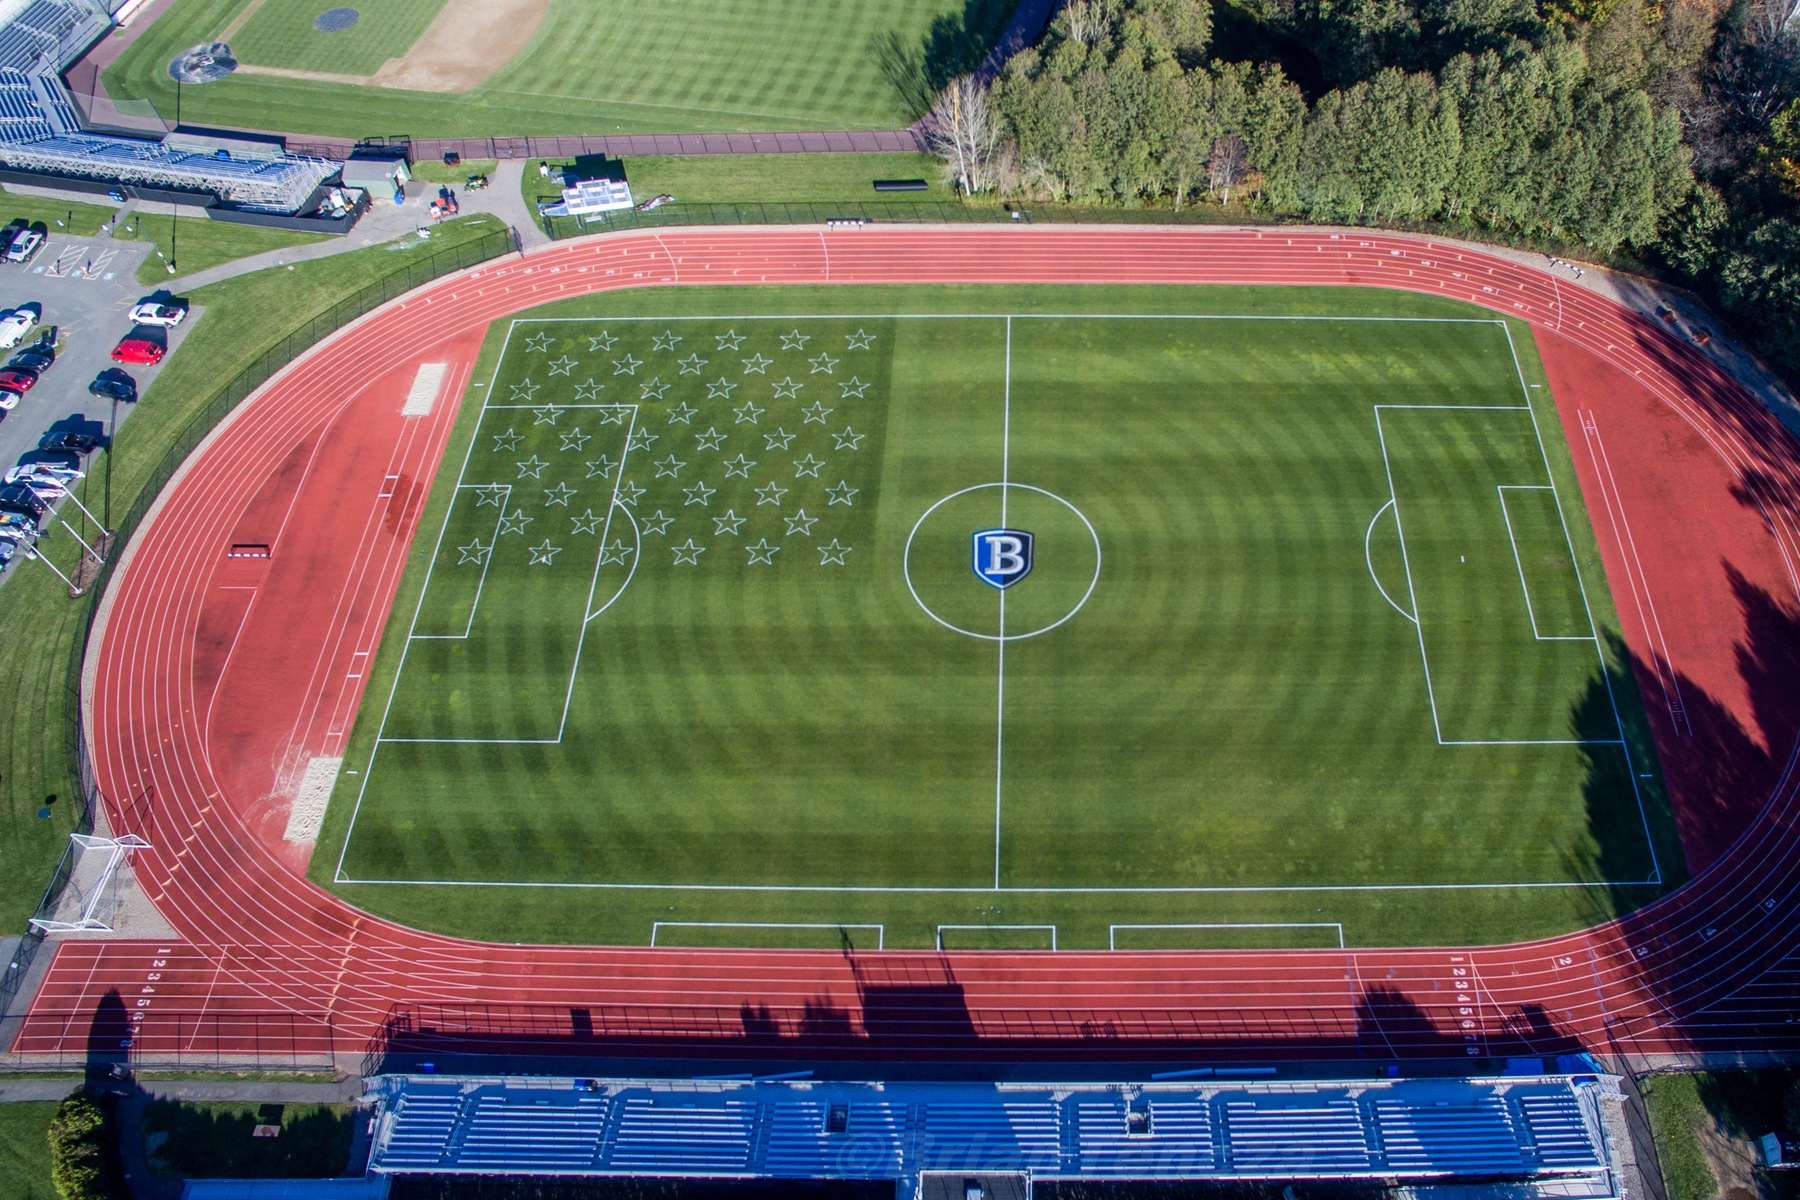 Bentley Soccer Field Given Patriotic Design for Veterans Day